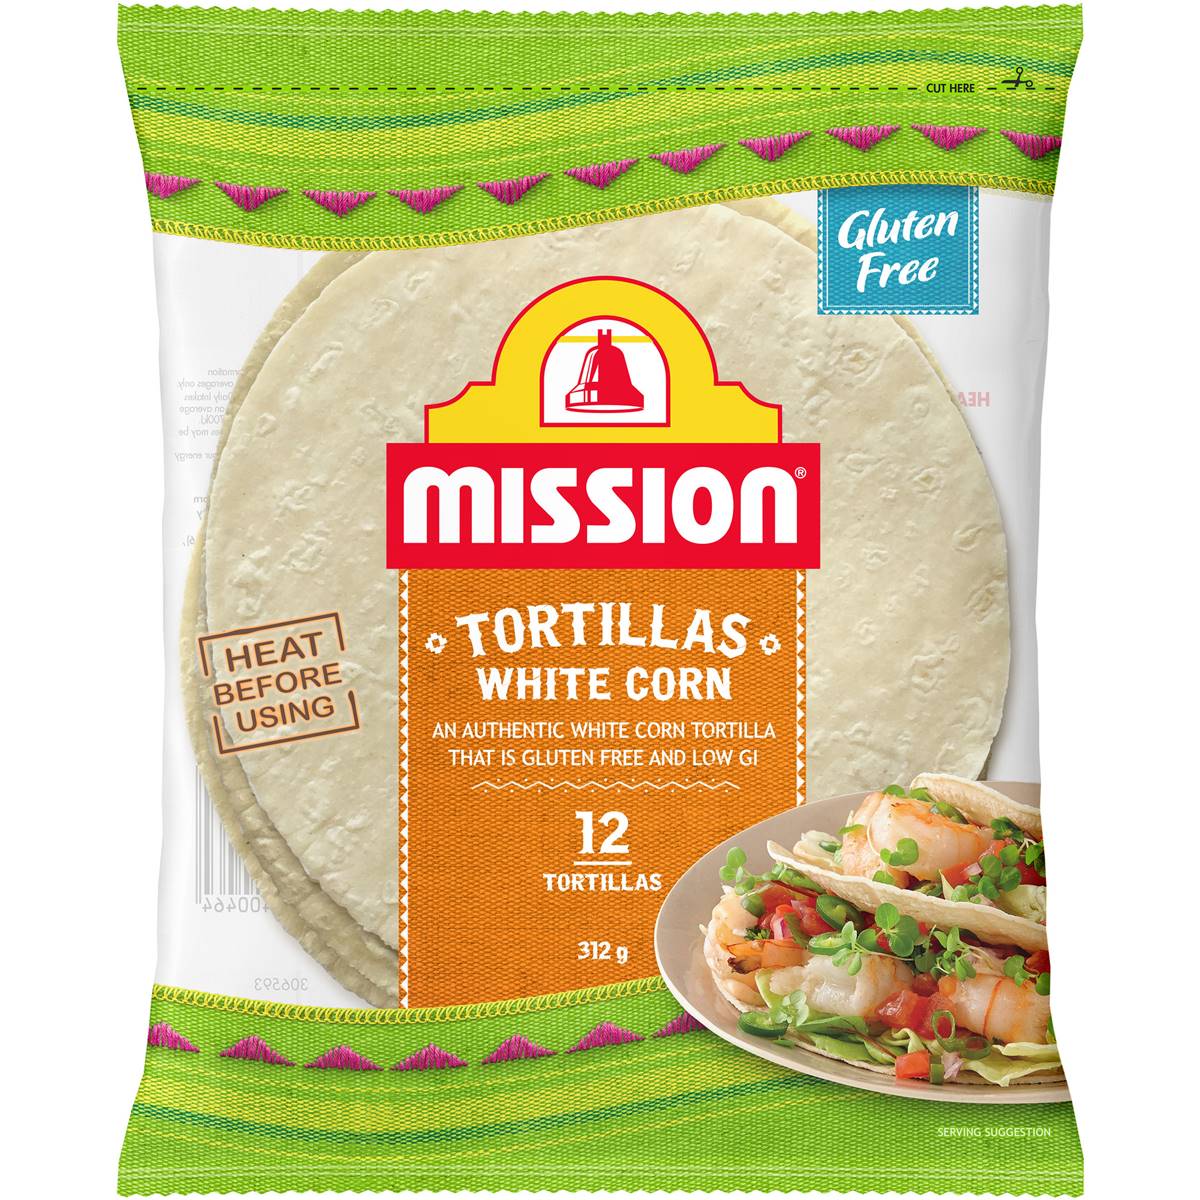 Calories in Mission White Corn Tortillas